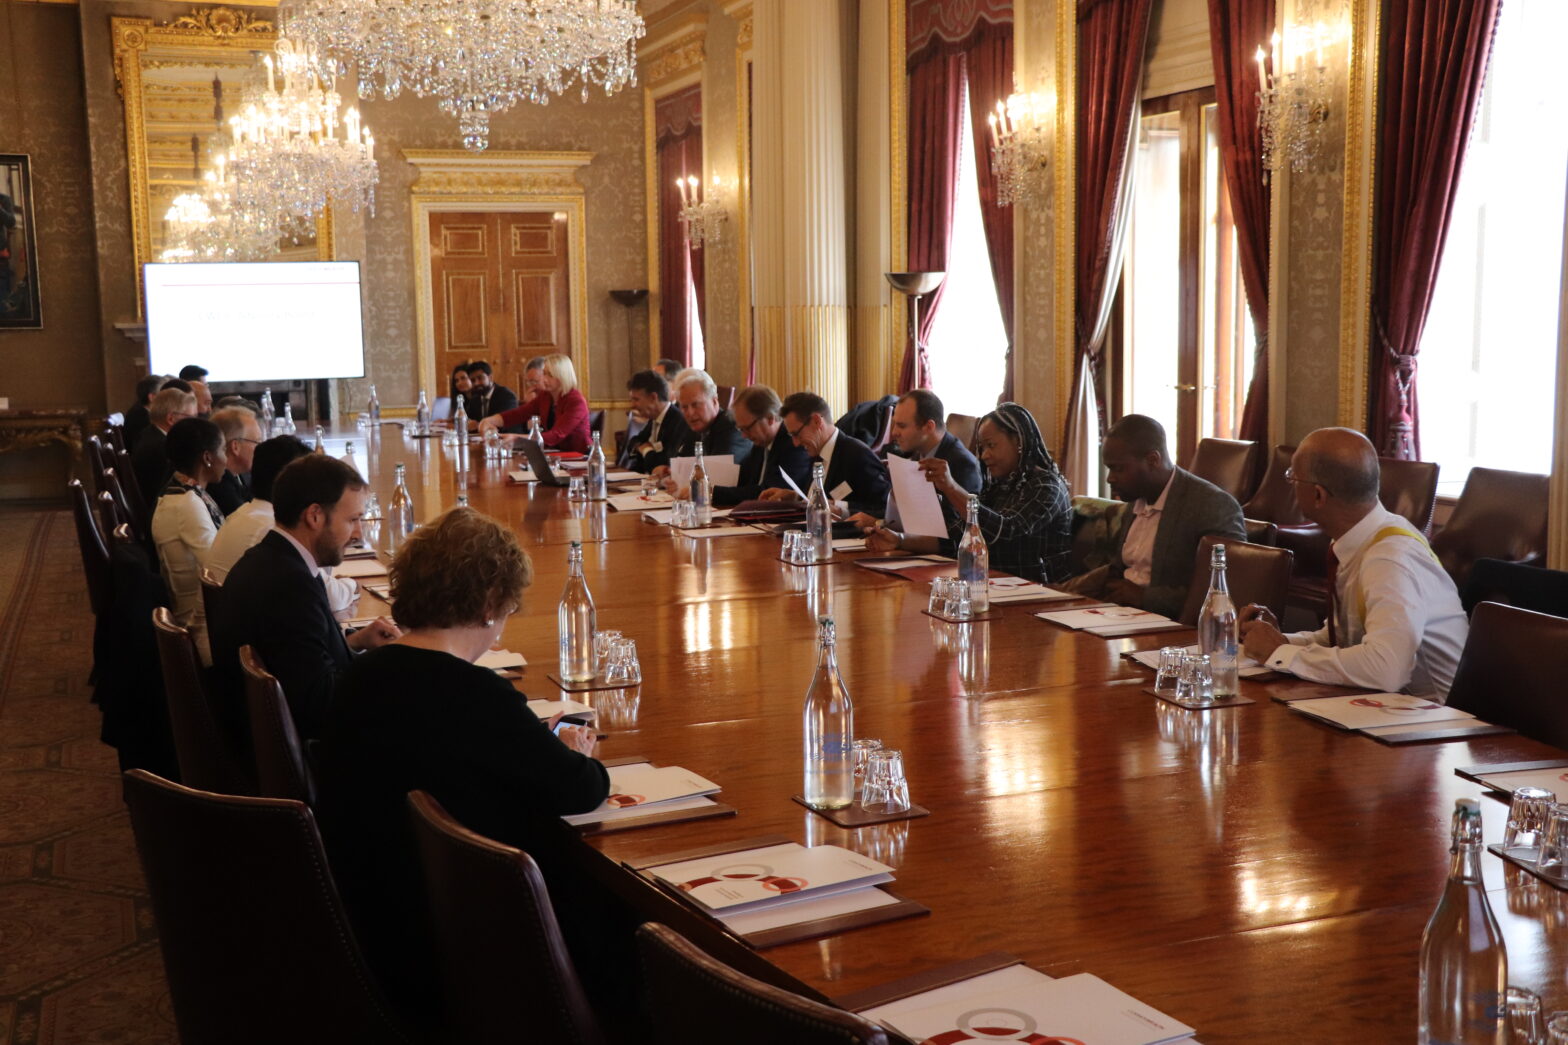 CWEIC Convenes Global Advisory Council Meeting at Marlborough House